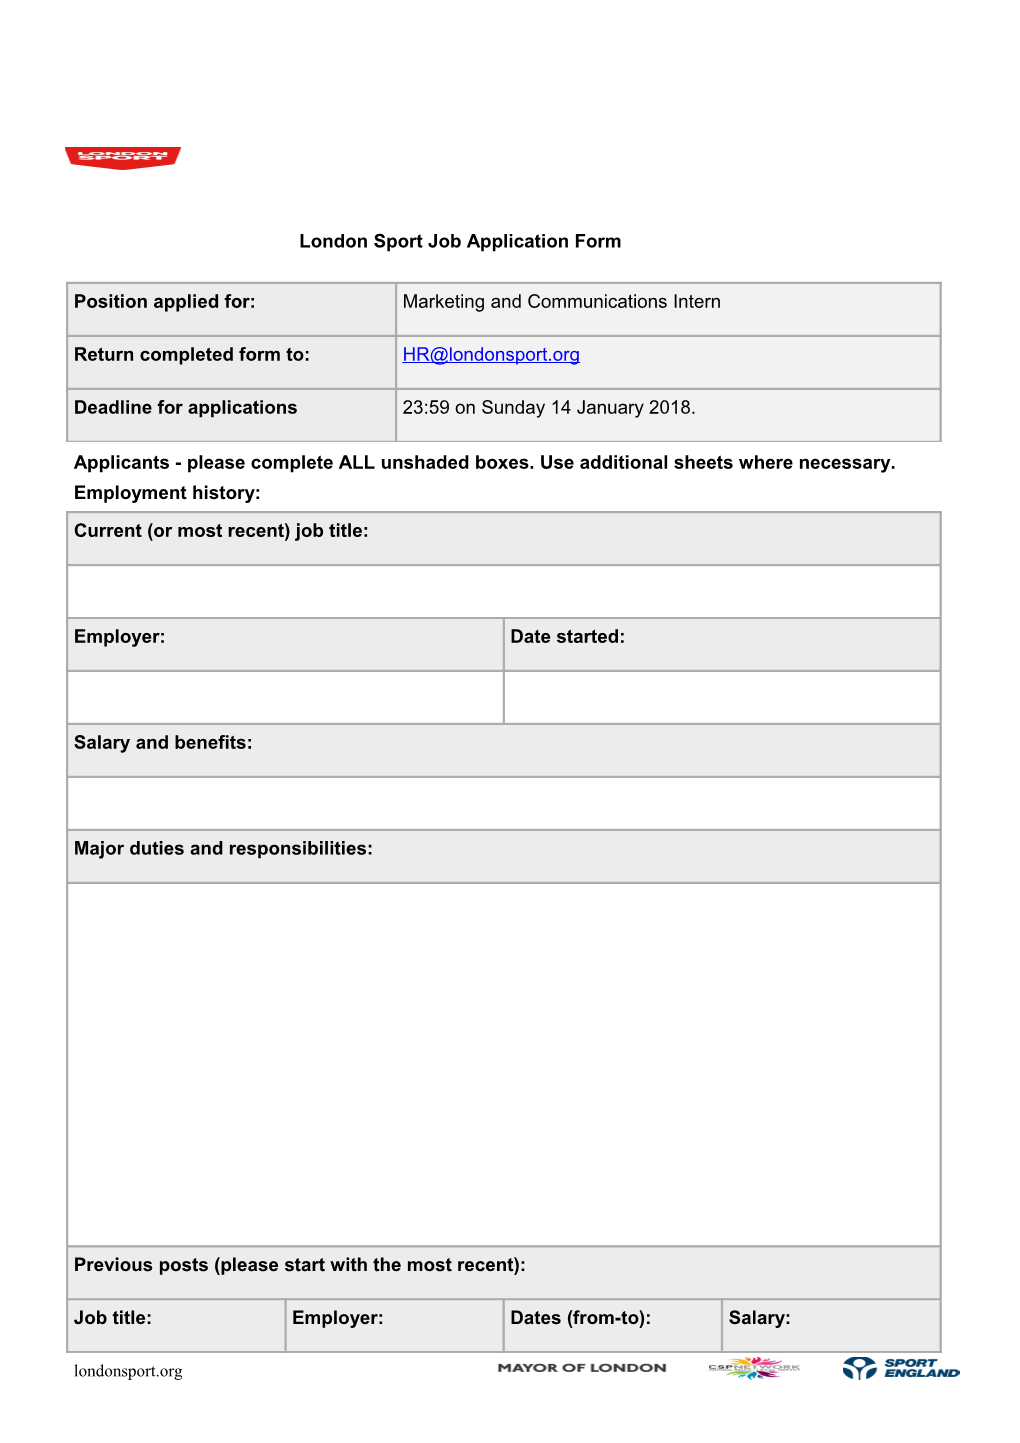 London Sport Job Application Form